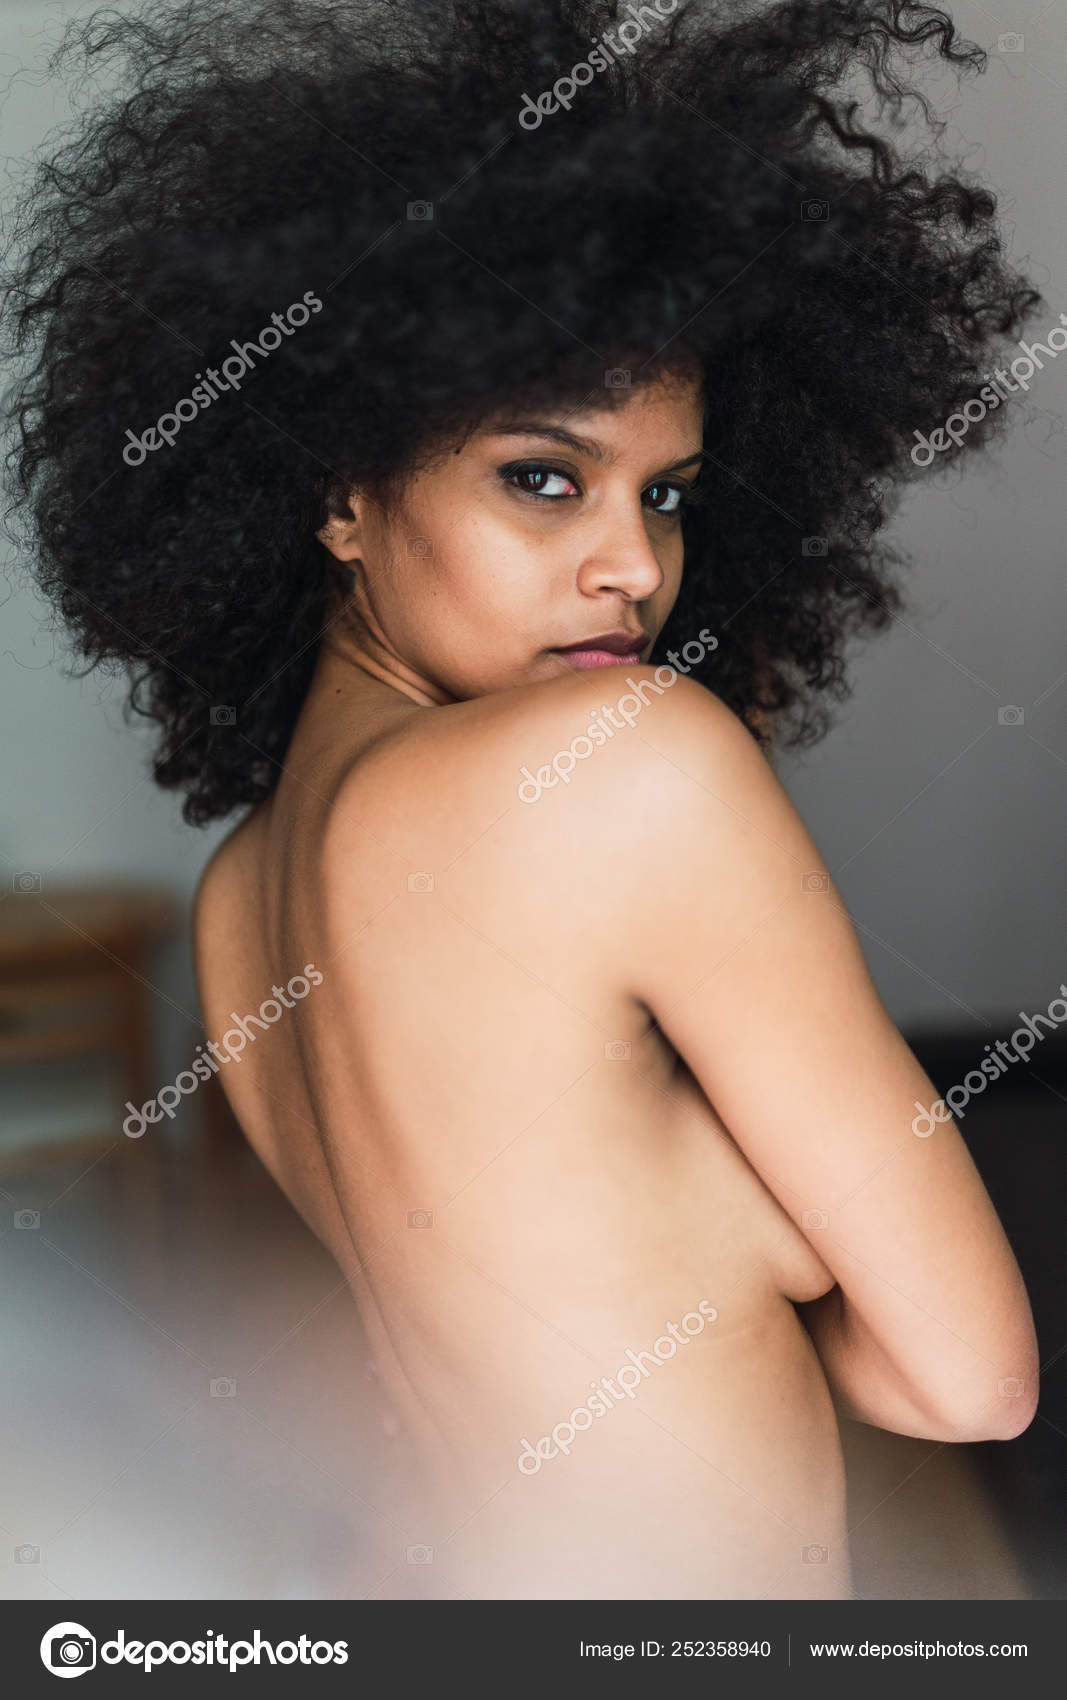 Black women with natural hair naked Kinky Hair Black Women Nude Bdsm Fetish